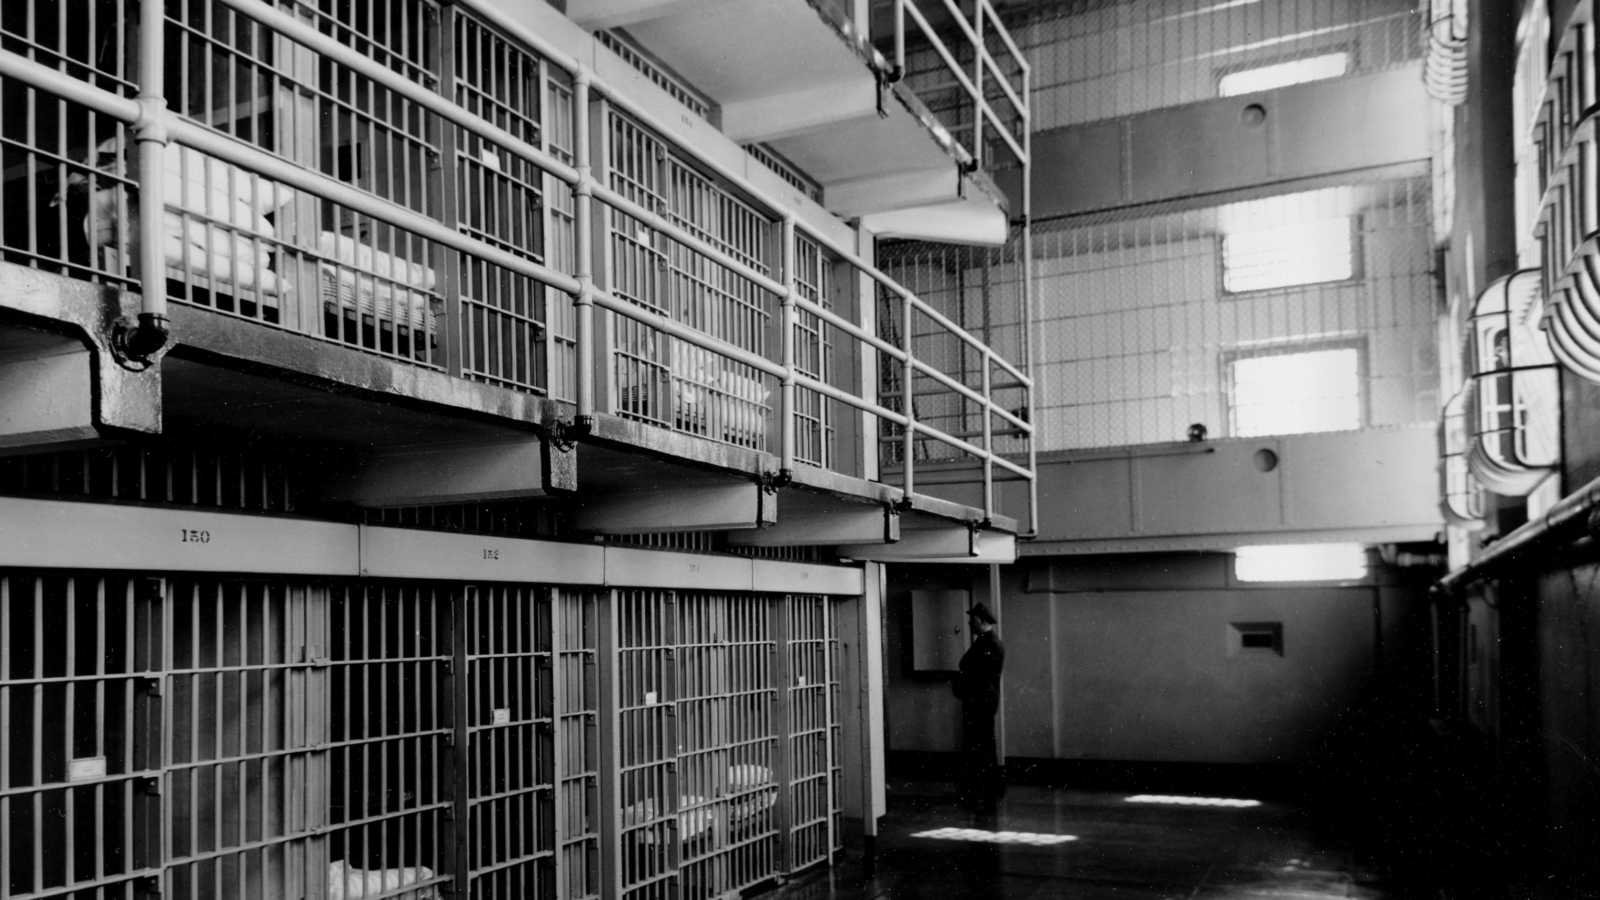 Prison escape алькатрас. Сан Франциско тюрьма Алькатрас. Тюрьма Алькатрас 2022. Тюрьма Сабанета Венесуэла. Алькатрас внутри.